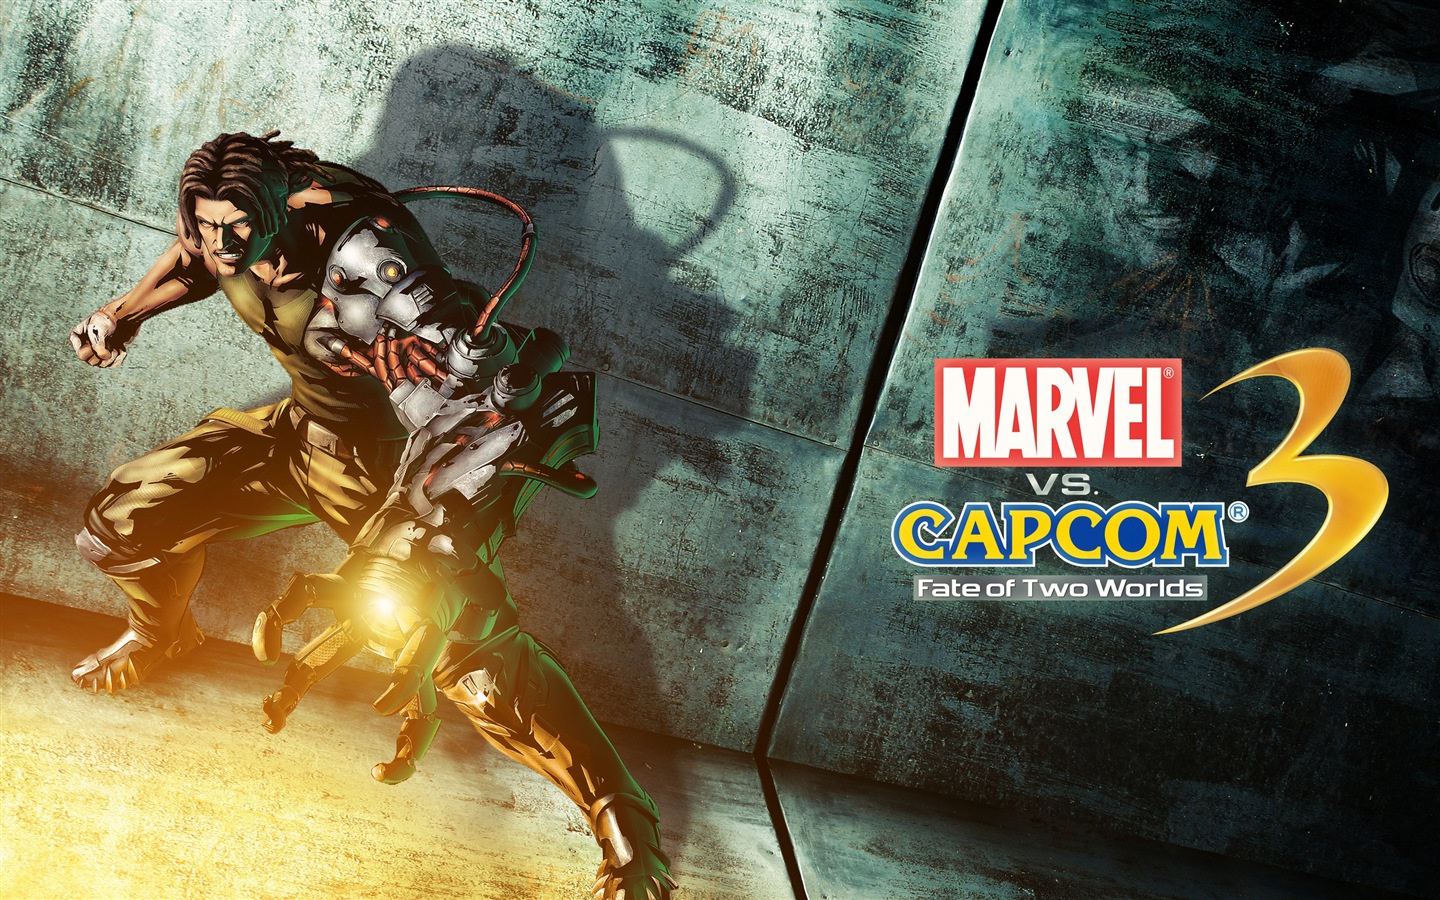 Marvel VS. Capcom 3: Fate of Two Worlds 漫画英雄VS.卡普空3 高清游戏壁纸8 - 1440x900